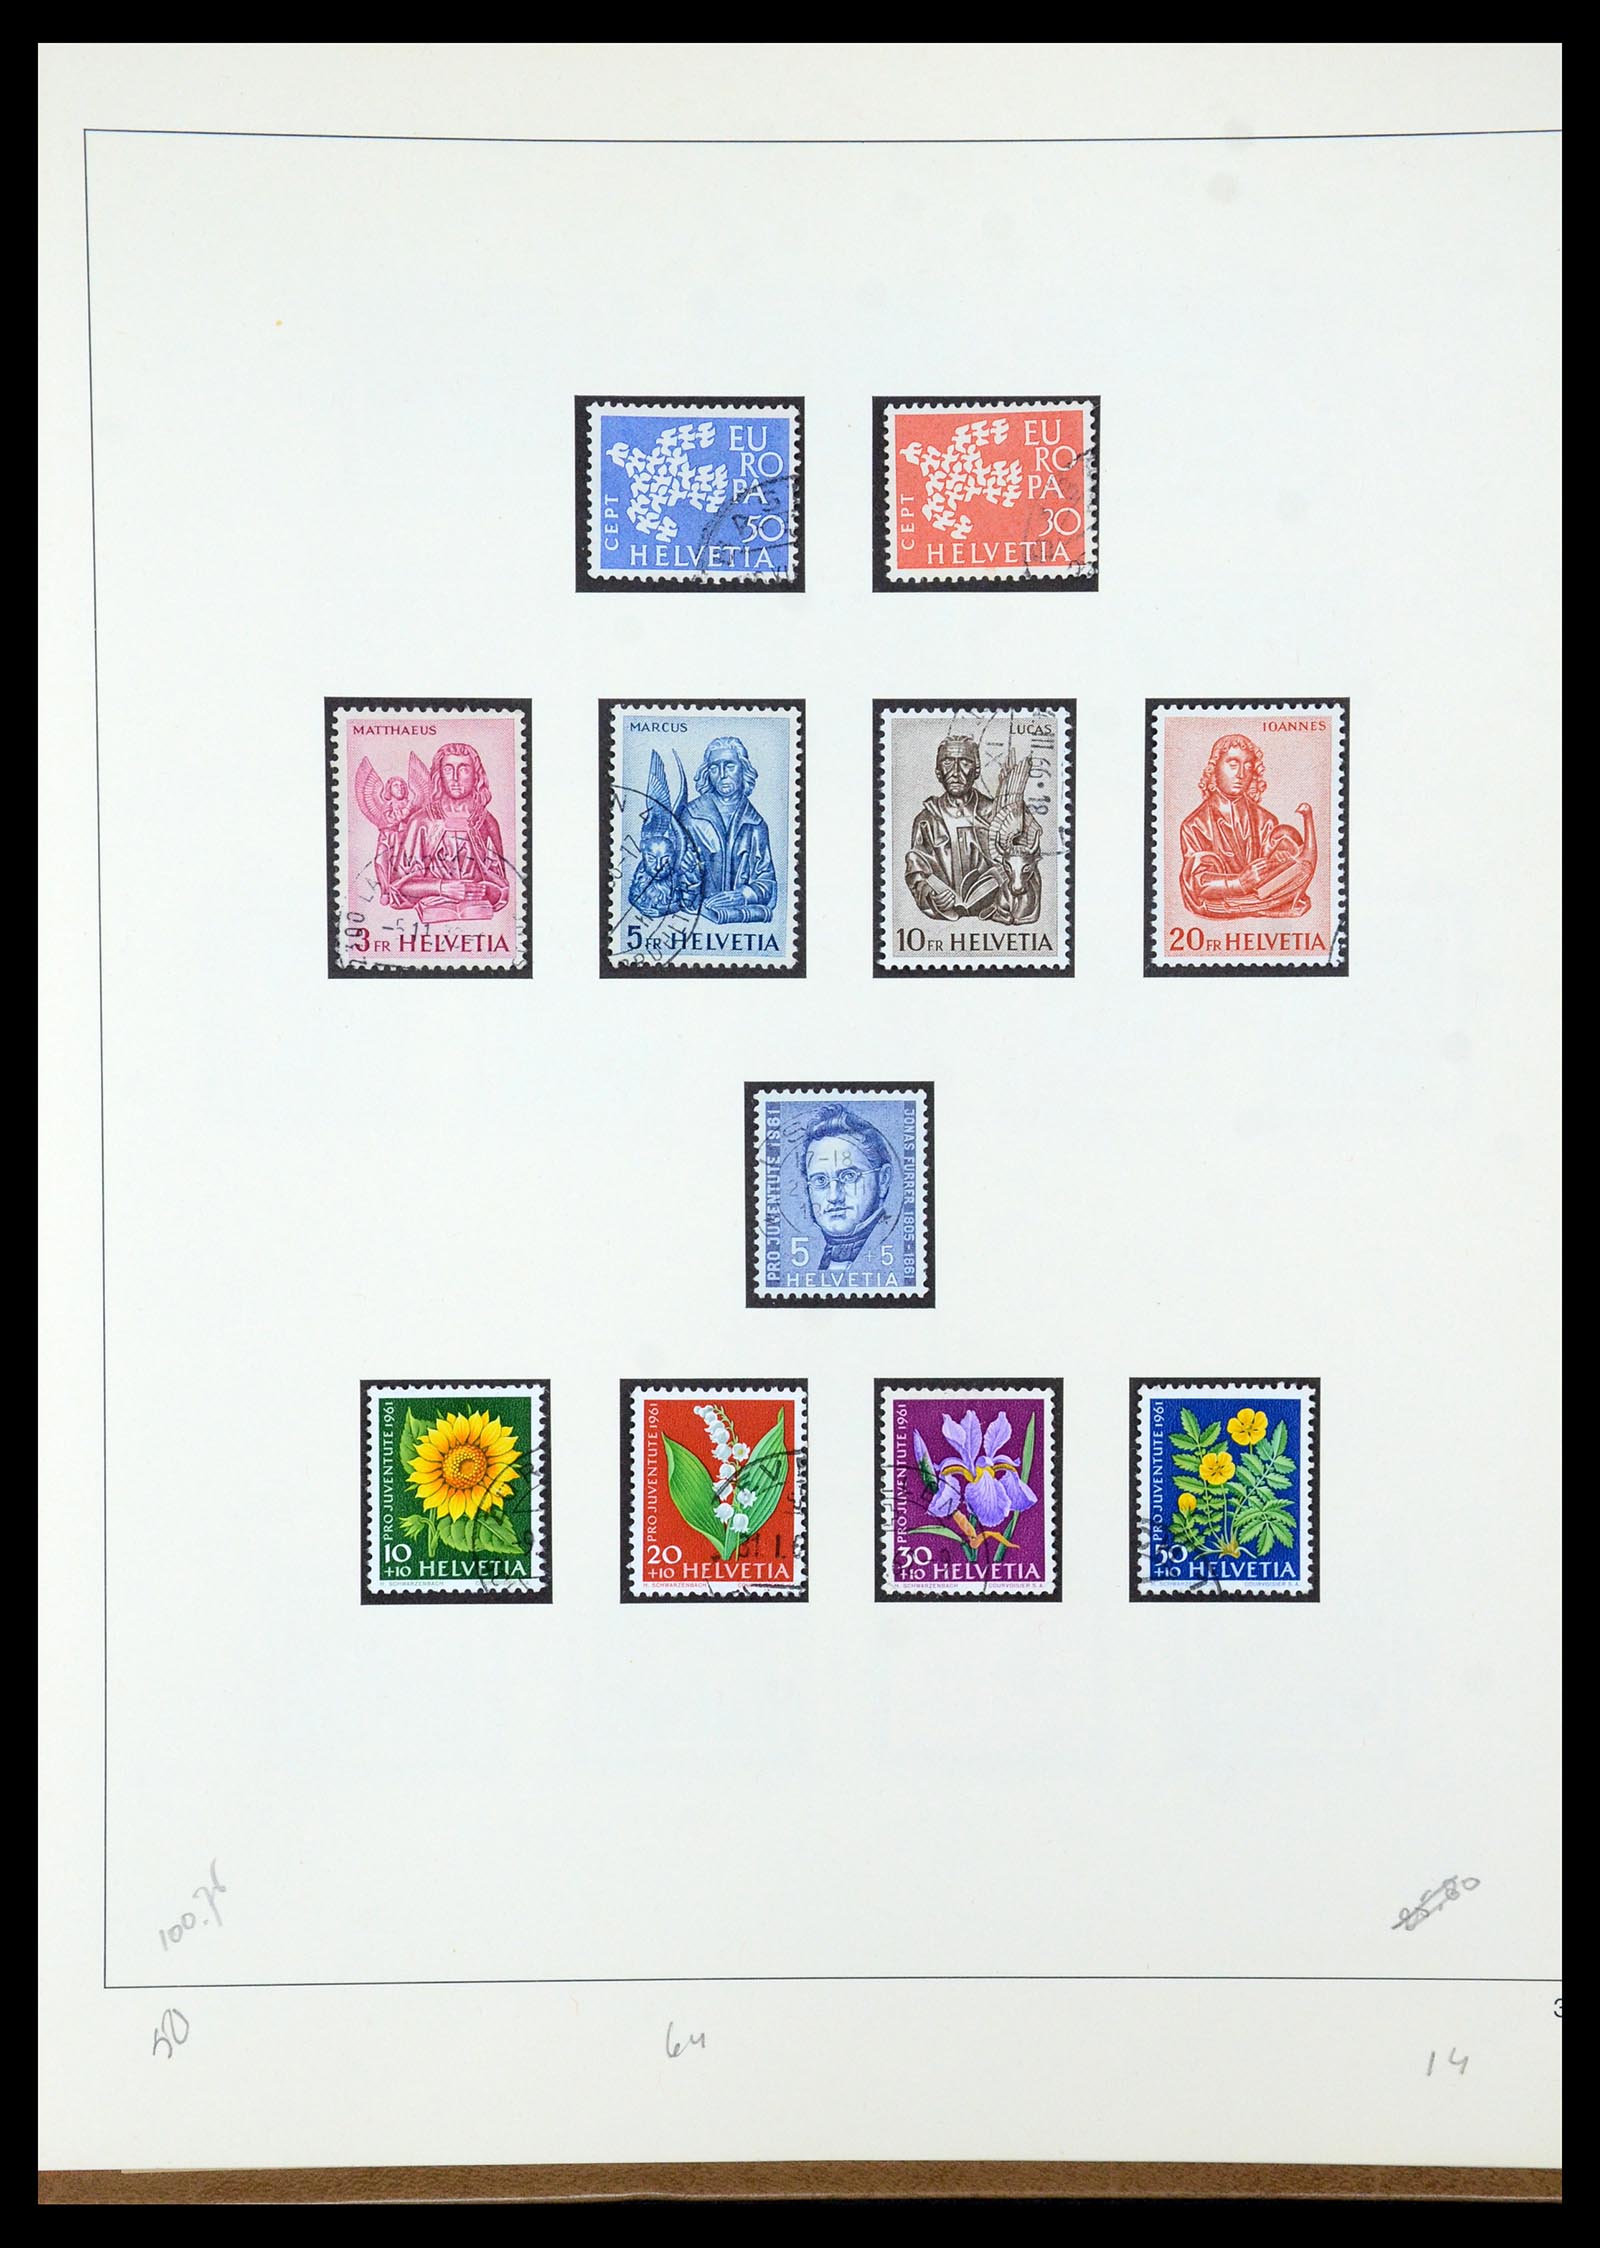 35605 079 - Stamp Collection 35605 Switzerland 1851-1985.